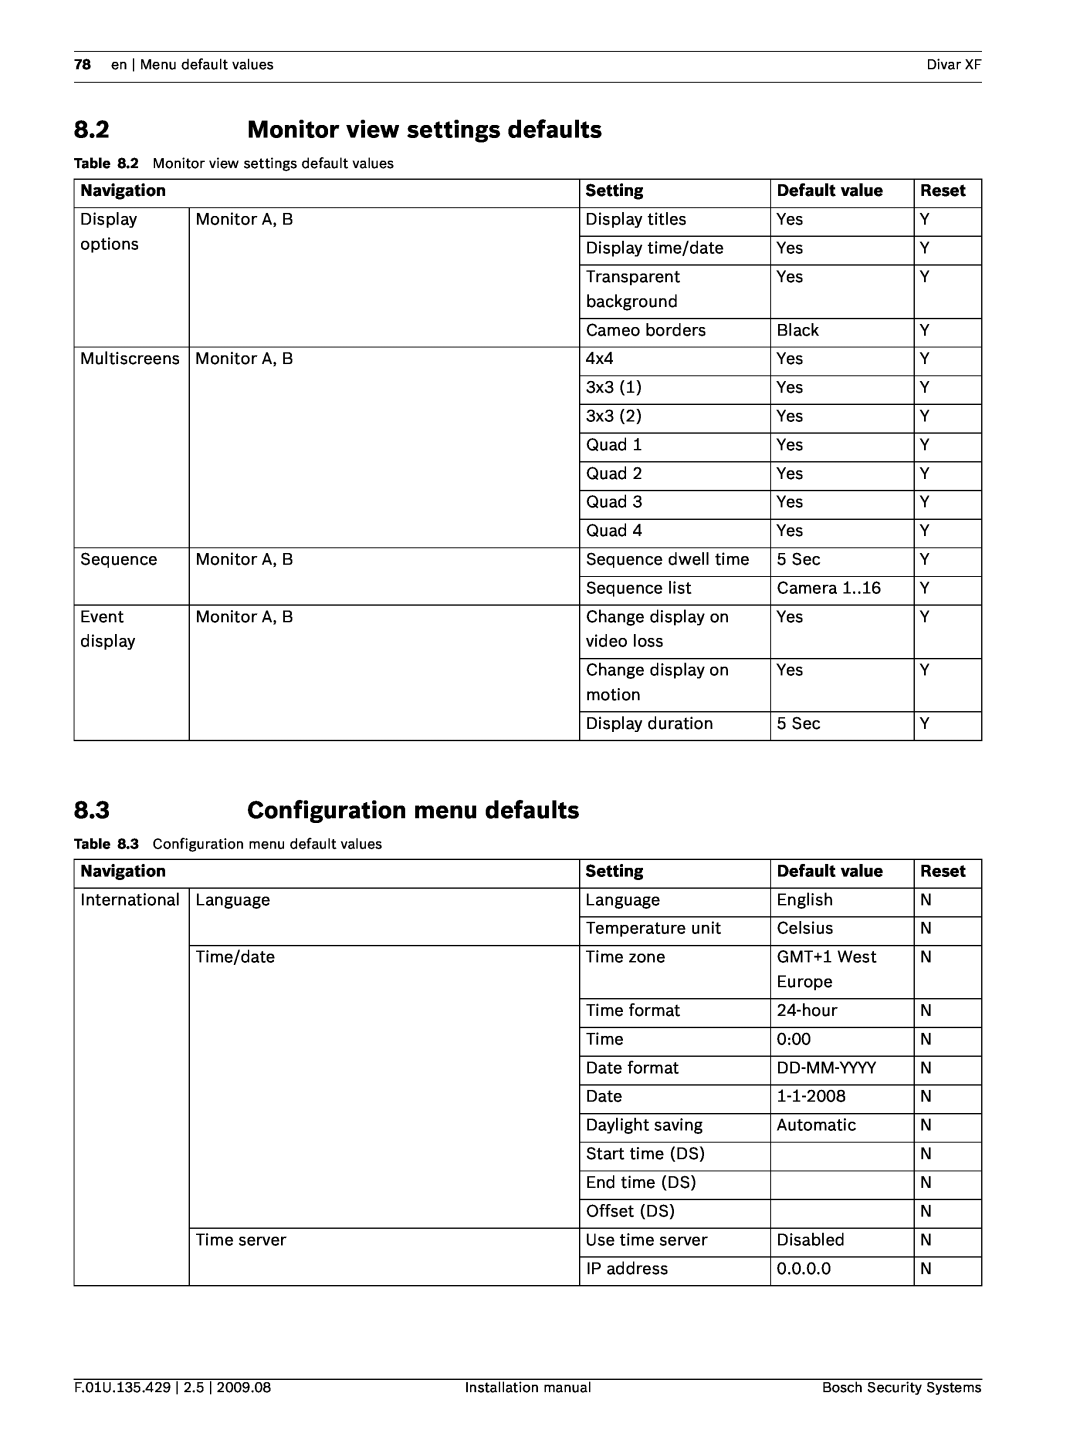 Bosch Appliances XF Monitor view settings defaults, Configuration menu defaults, Navigation, Setting, Default value, Reset 